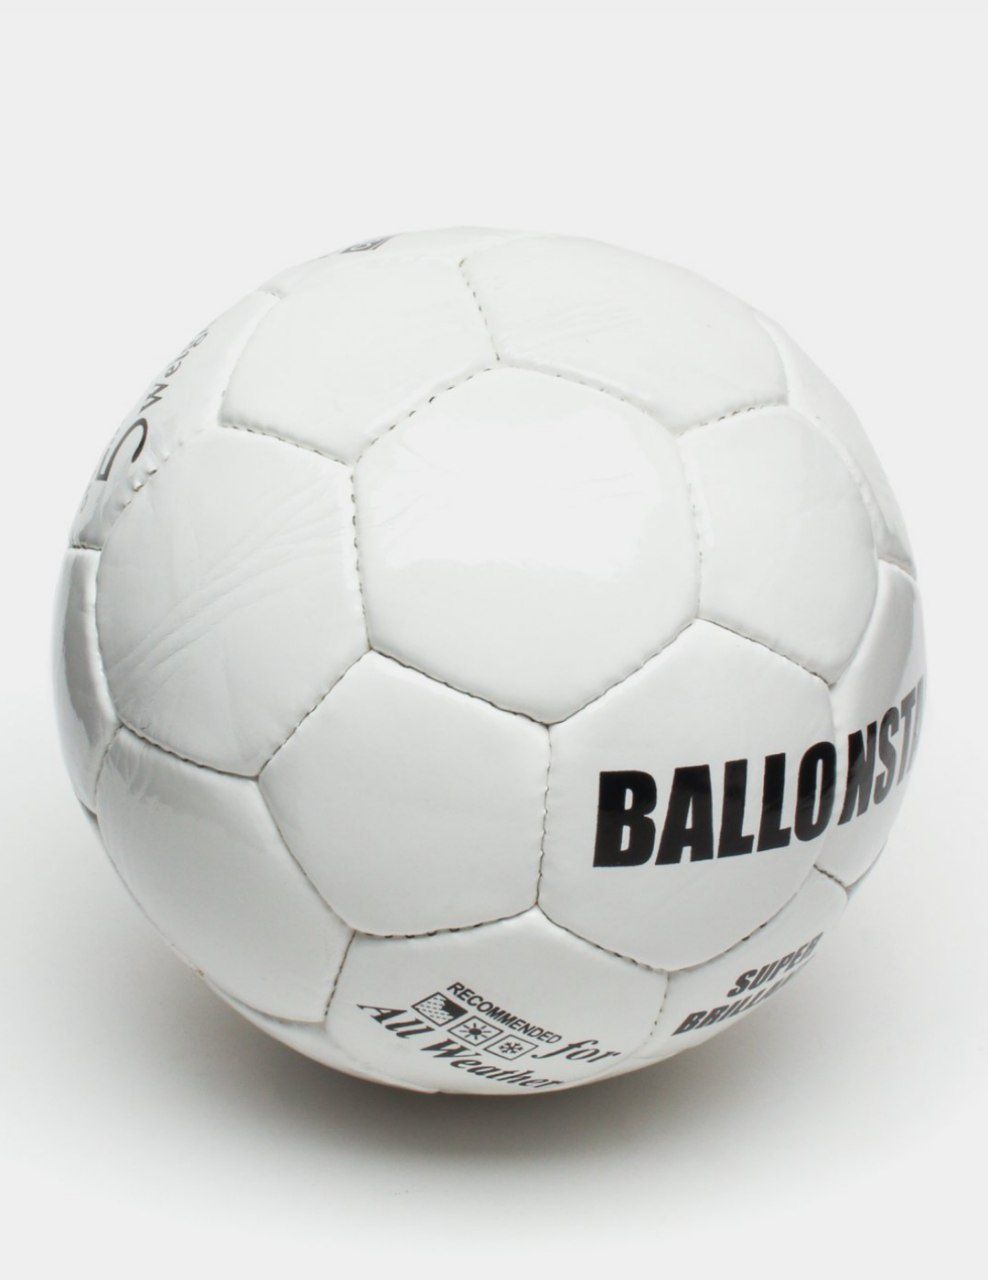 Футбольный мяч Ballostar Select brilliant, размер 5